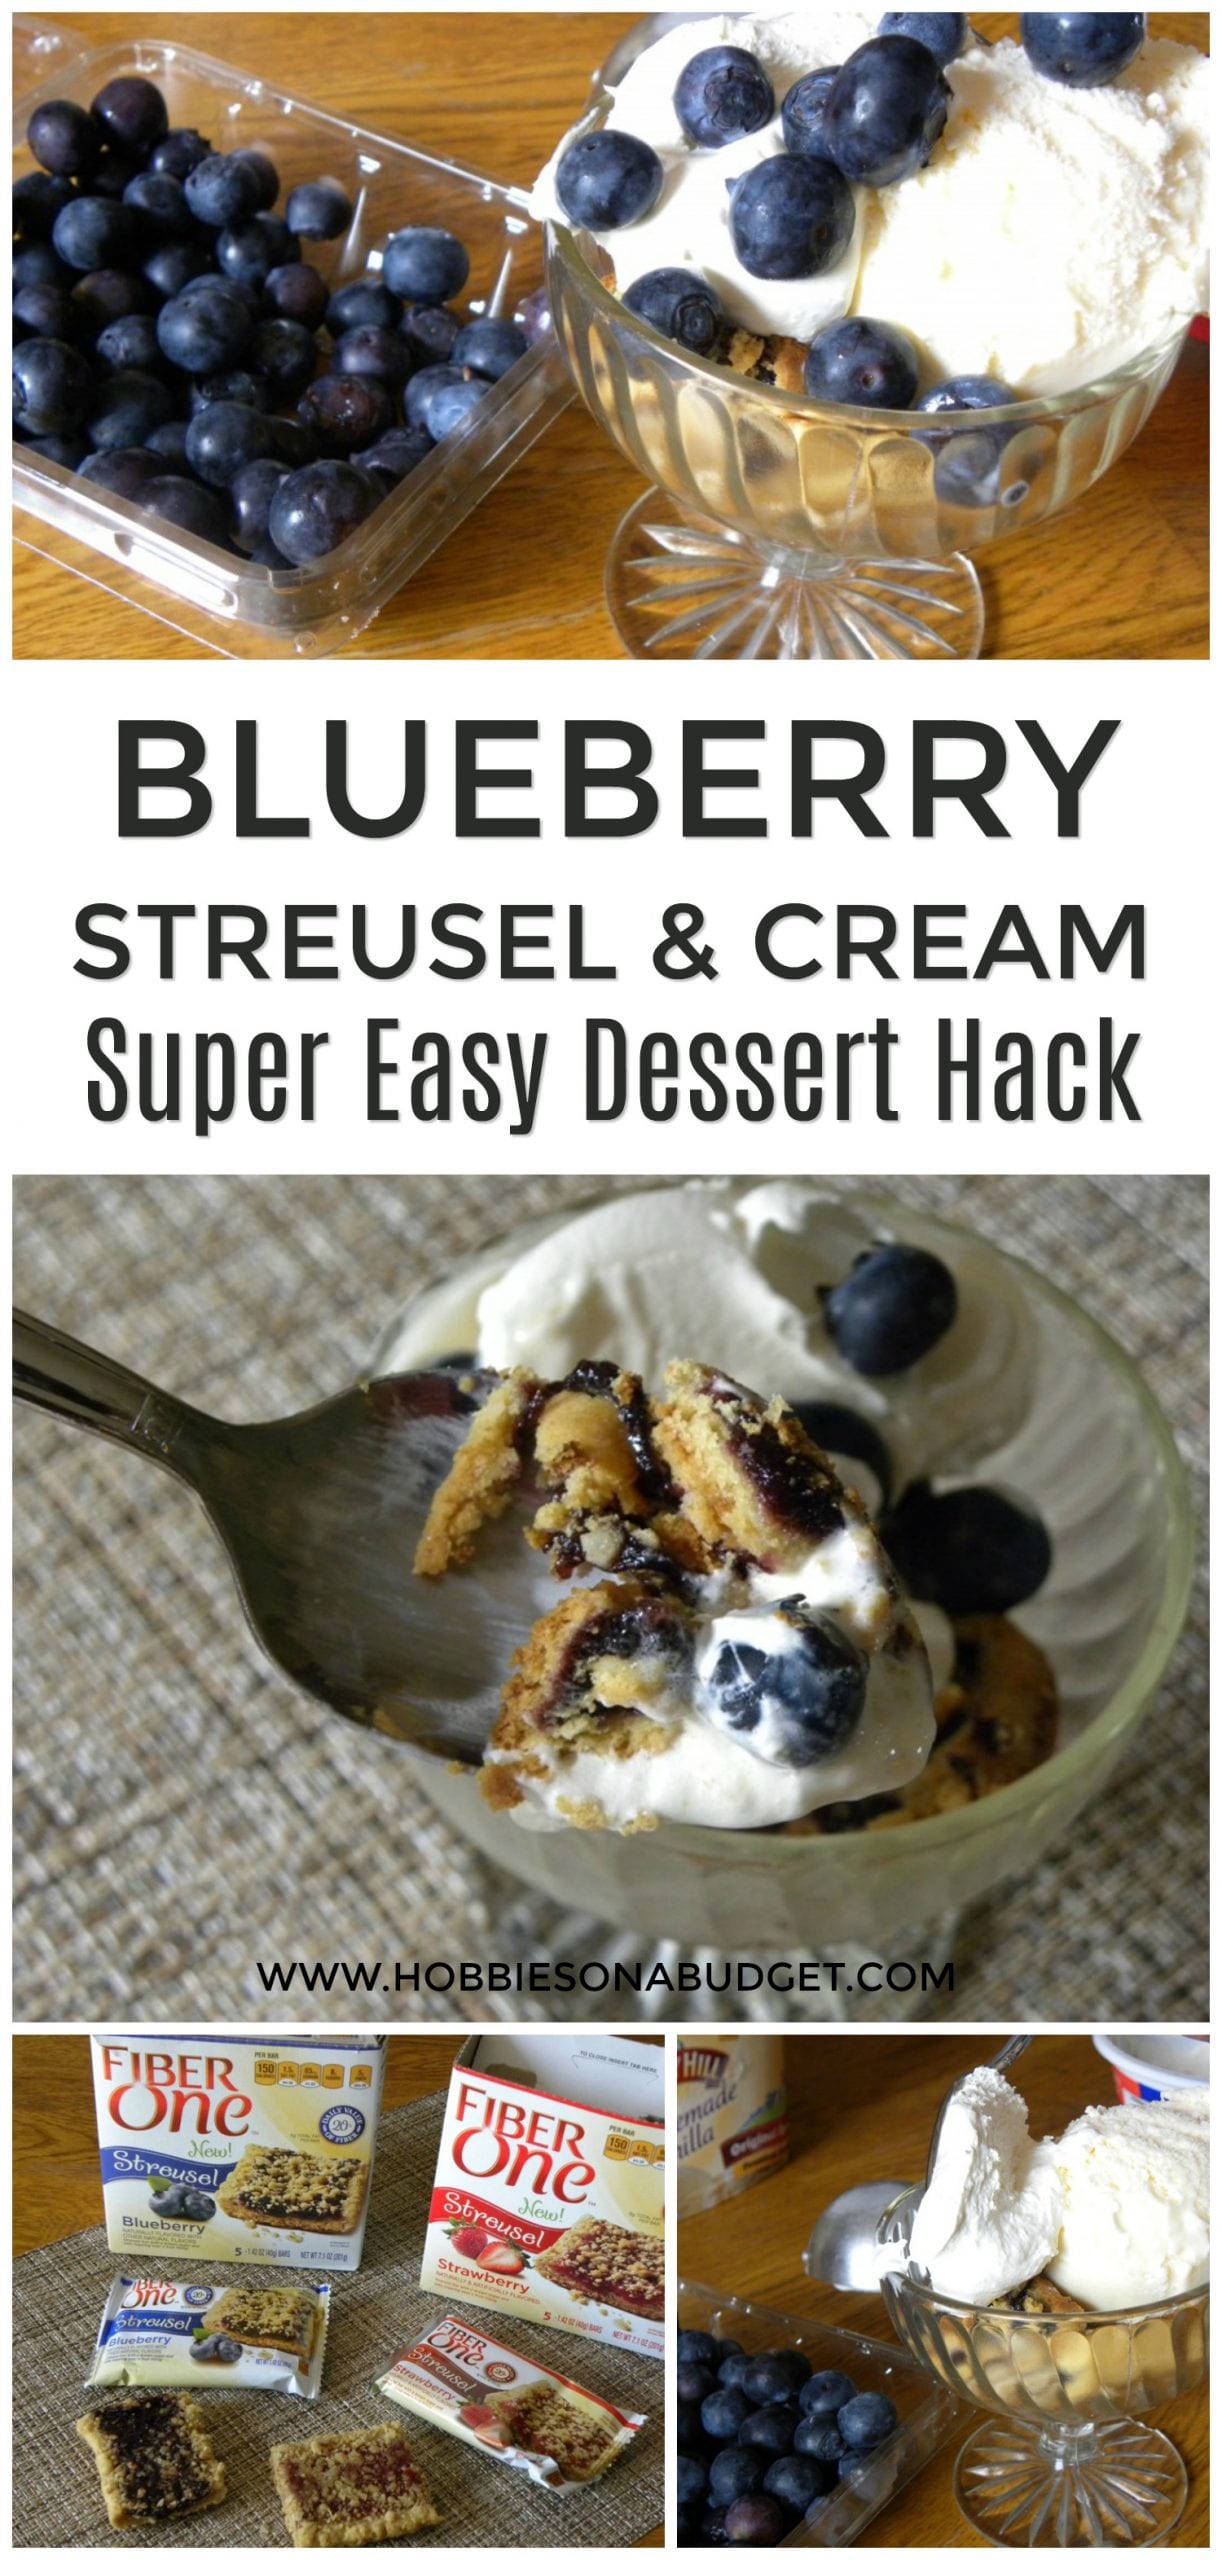 Blueberry Streusel & Cream